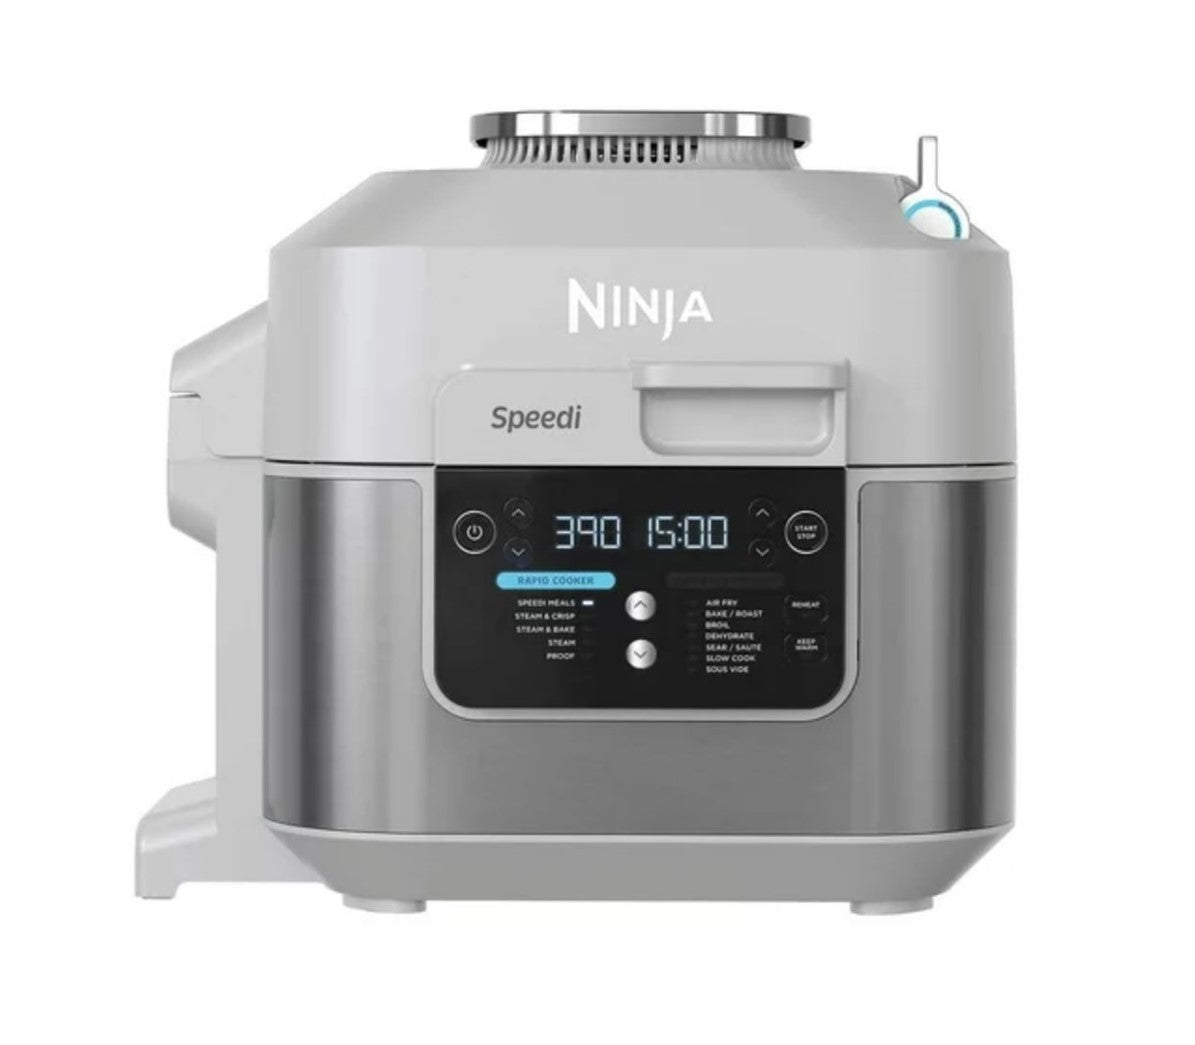 Ninja SF301 6-Quart 12-in-1 Functions All In One Pot Speedi Rapid Cooker & Air Fryer, Gray